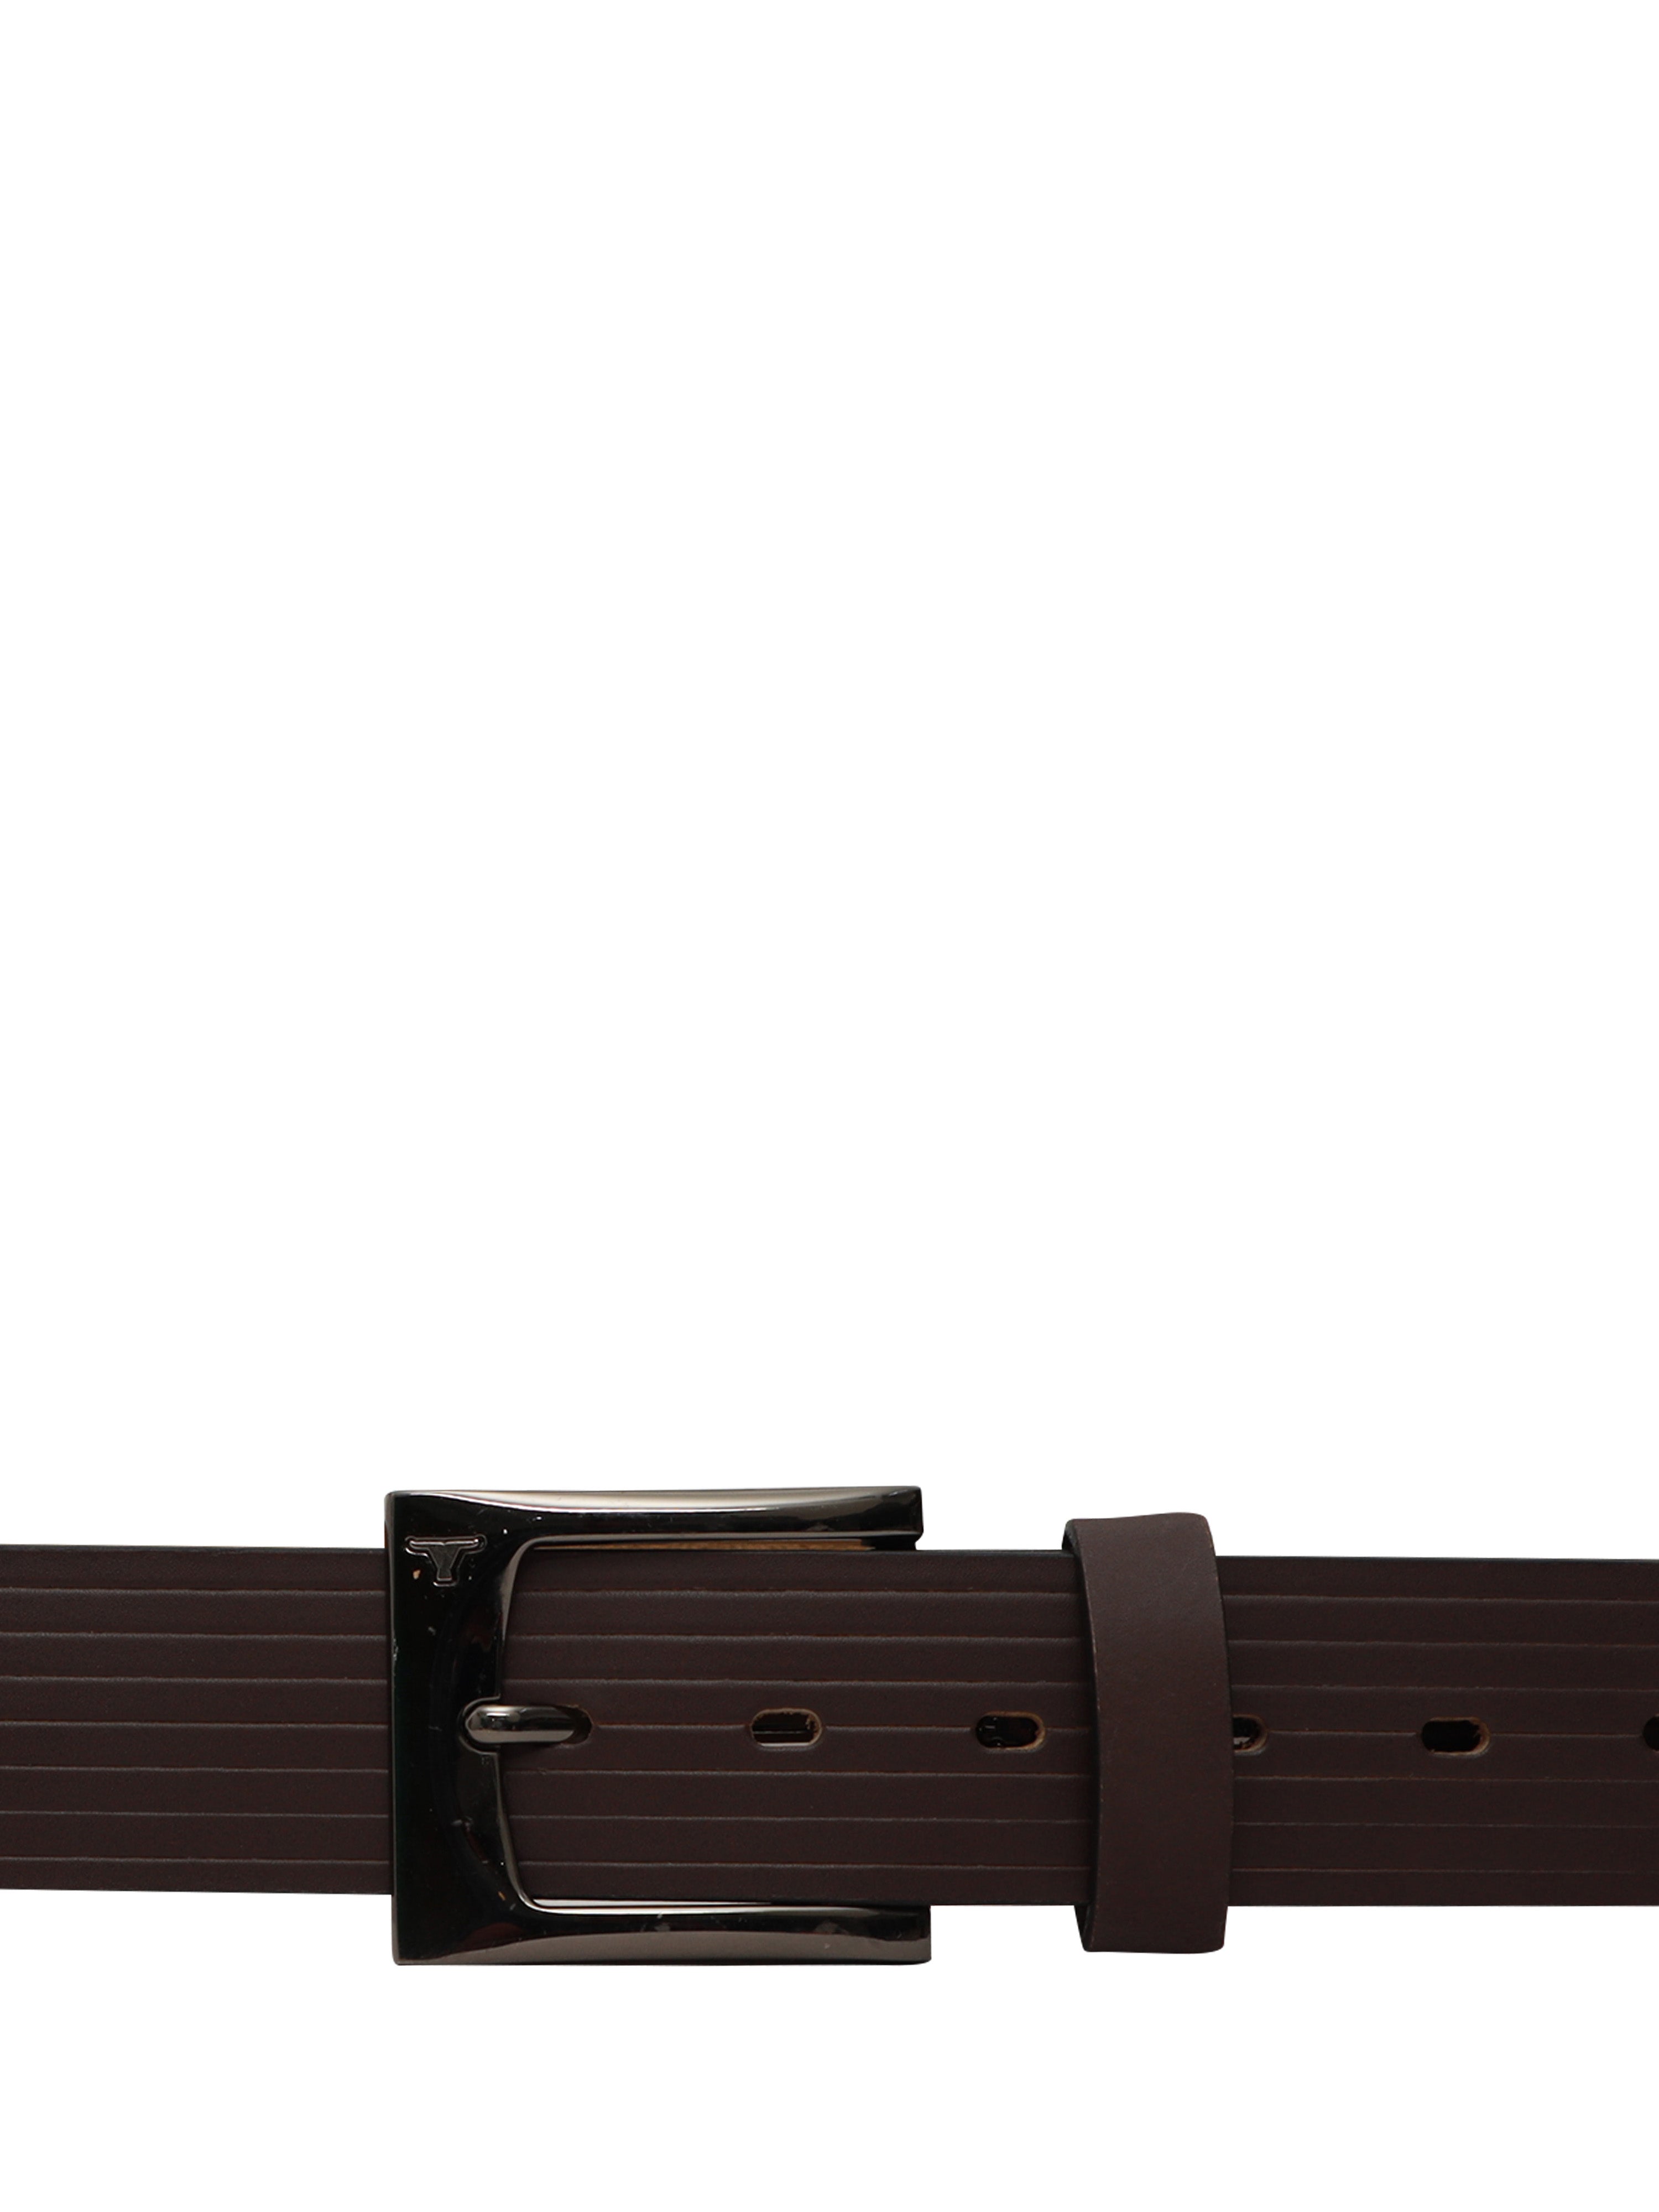 Bulchee Premium Collections Men's Genuine Leather Belt | Embossed Jeans | Brown | BUL2180B